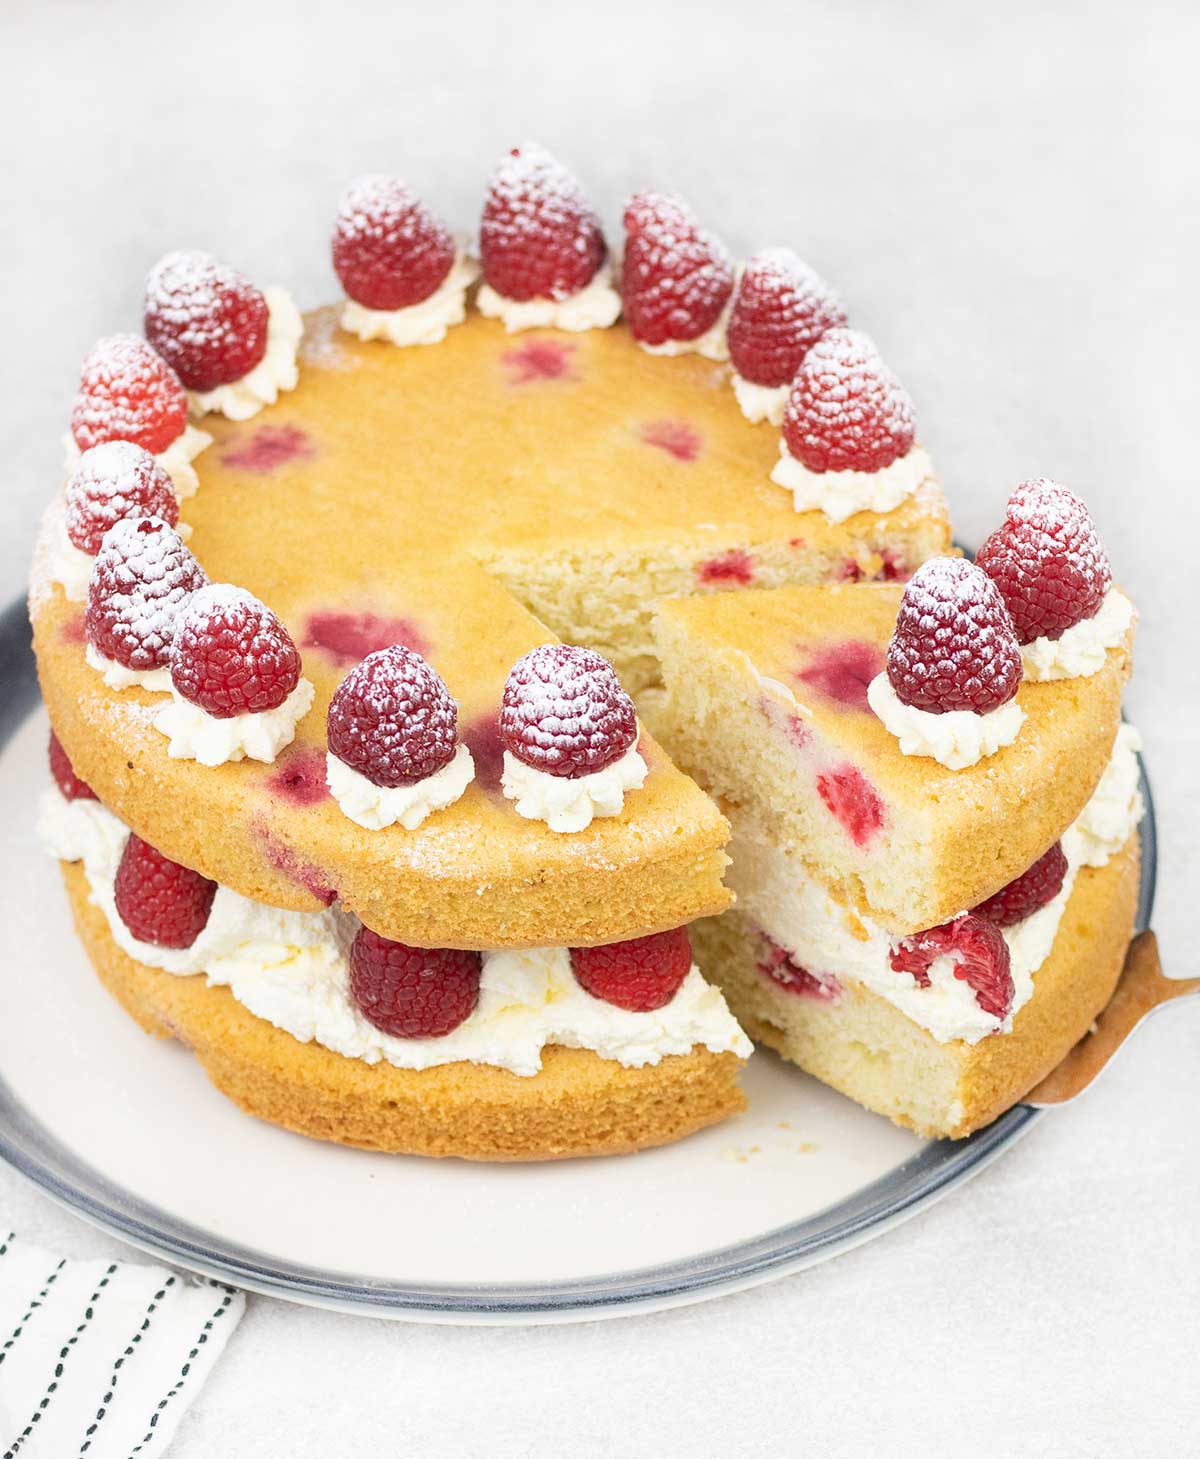 Raspberry sponge cake in a serving plate.